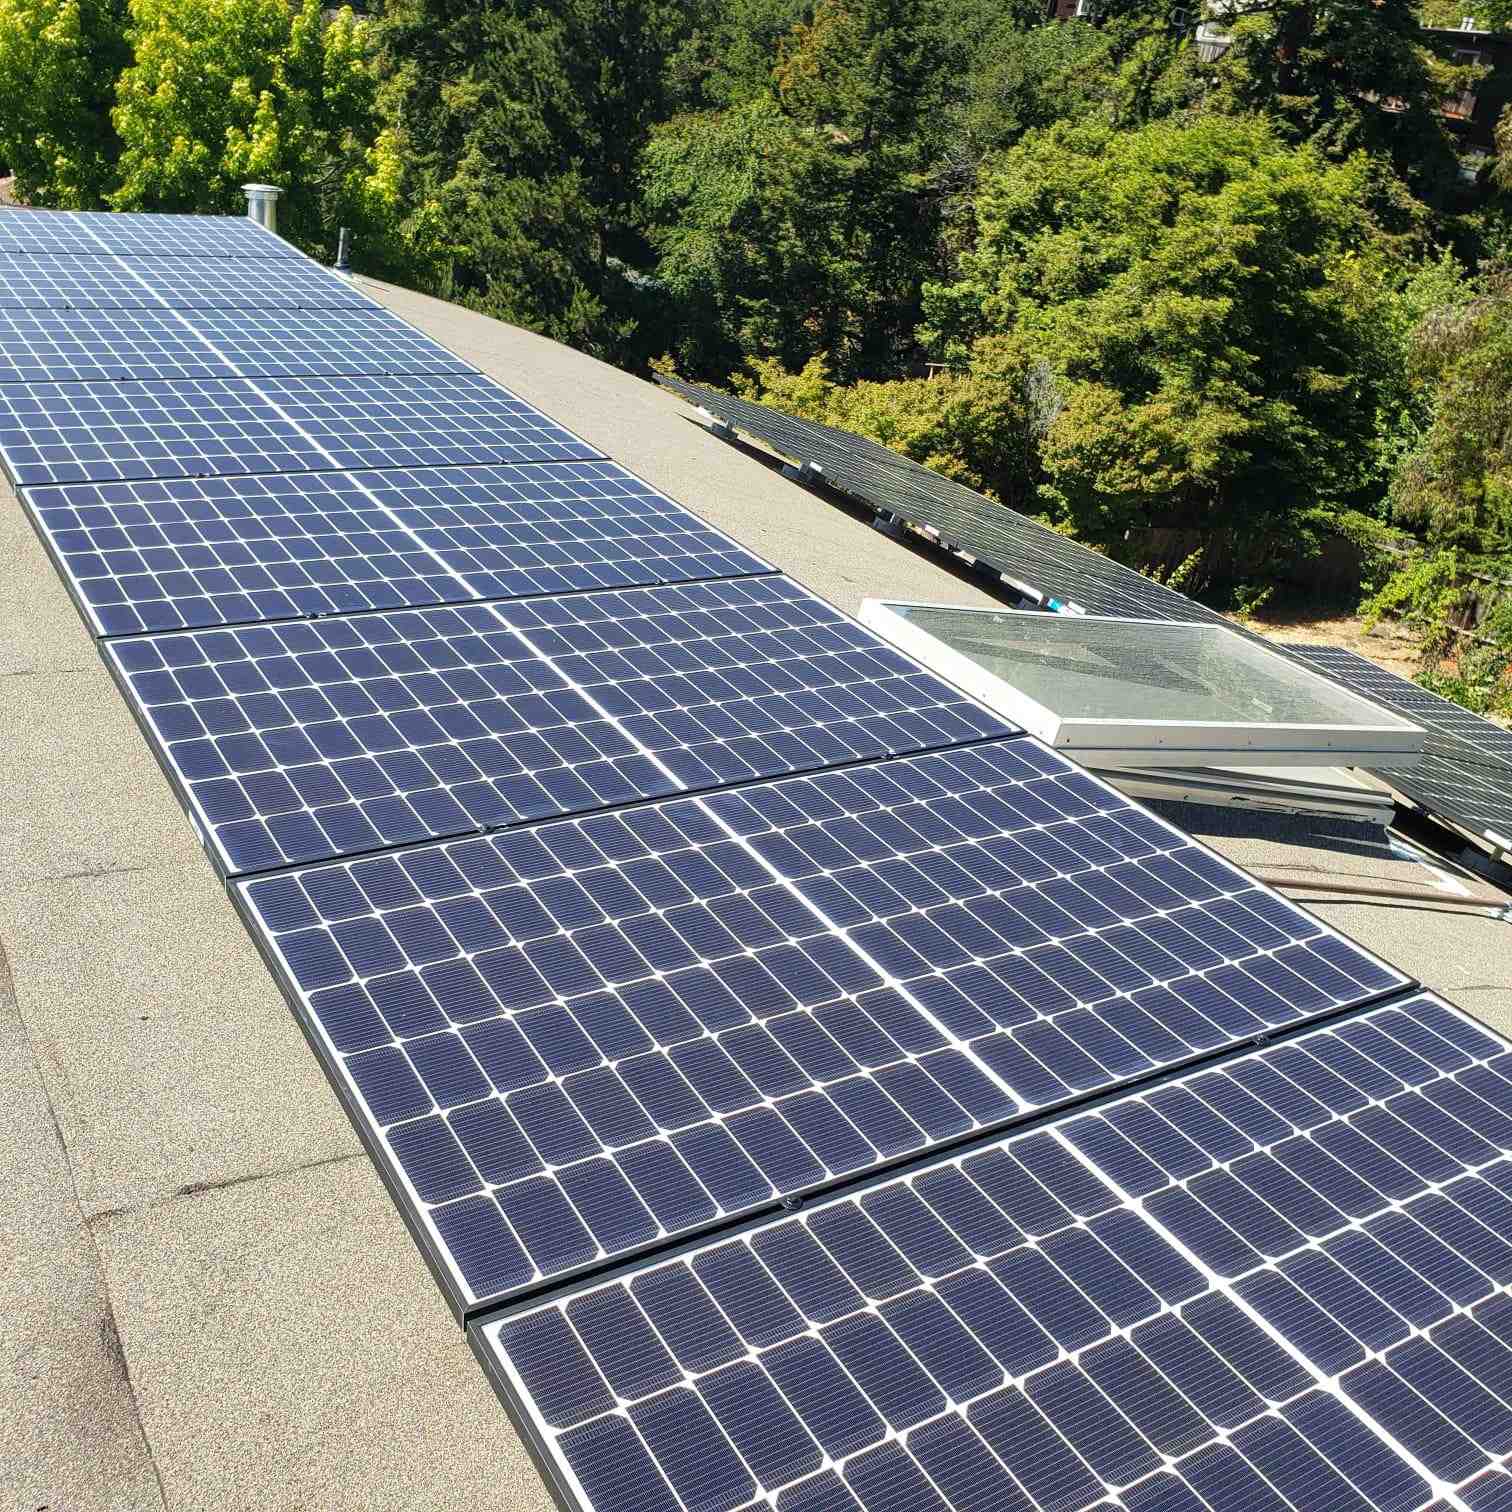 Is solar installation really free?